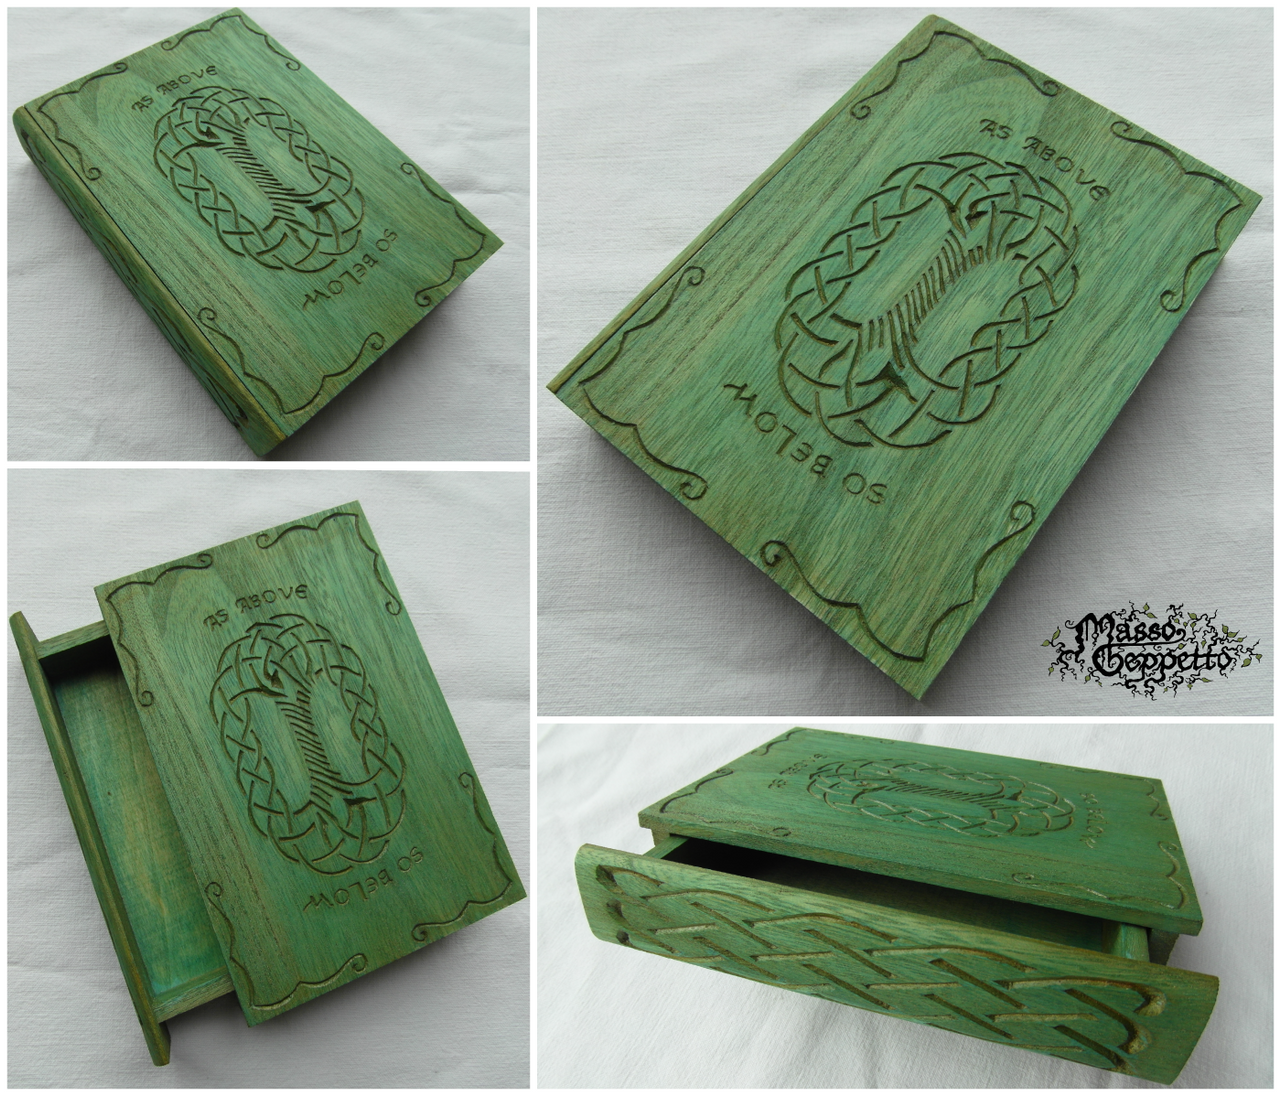 BOOK OF YGGDRASIL (box)